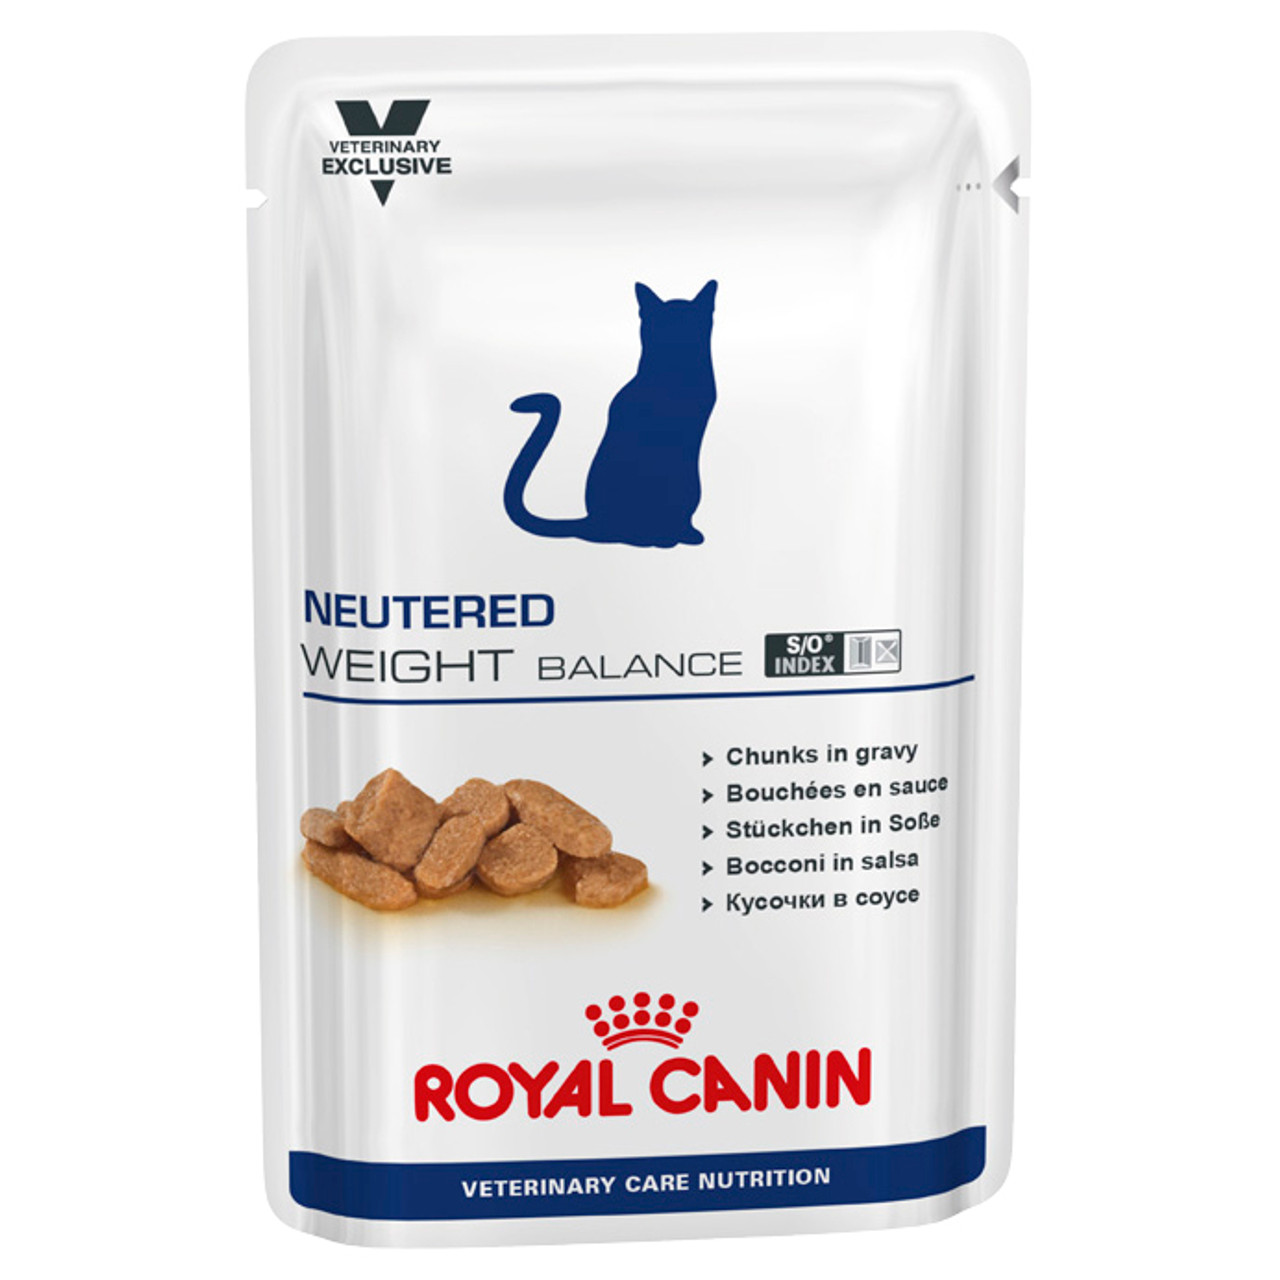 royal canin neutered satiety balance 1 5 kg